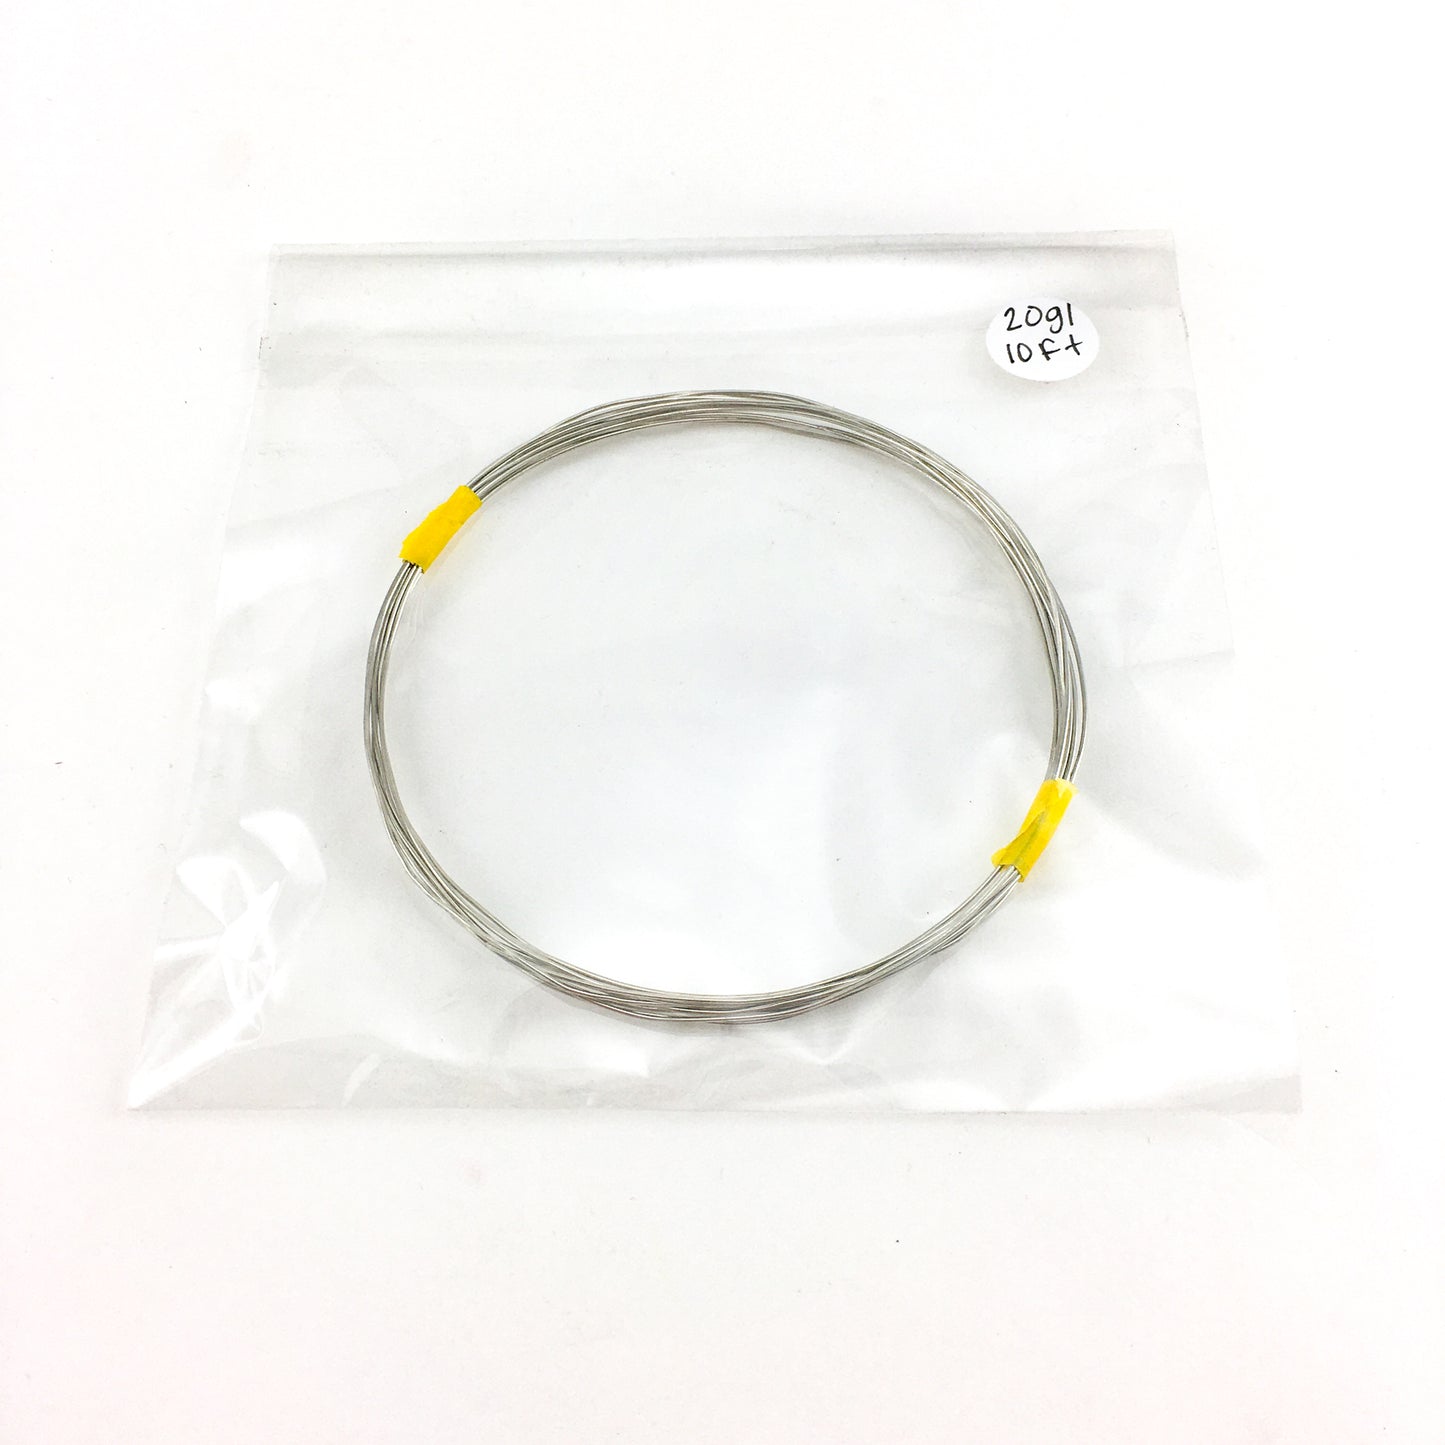 Round Nickel Silver Wire - Soft Temper a.k.a. Dead Soft - 10 ft. - 20g by Contenti - K. A. Artist Shop